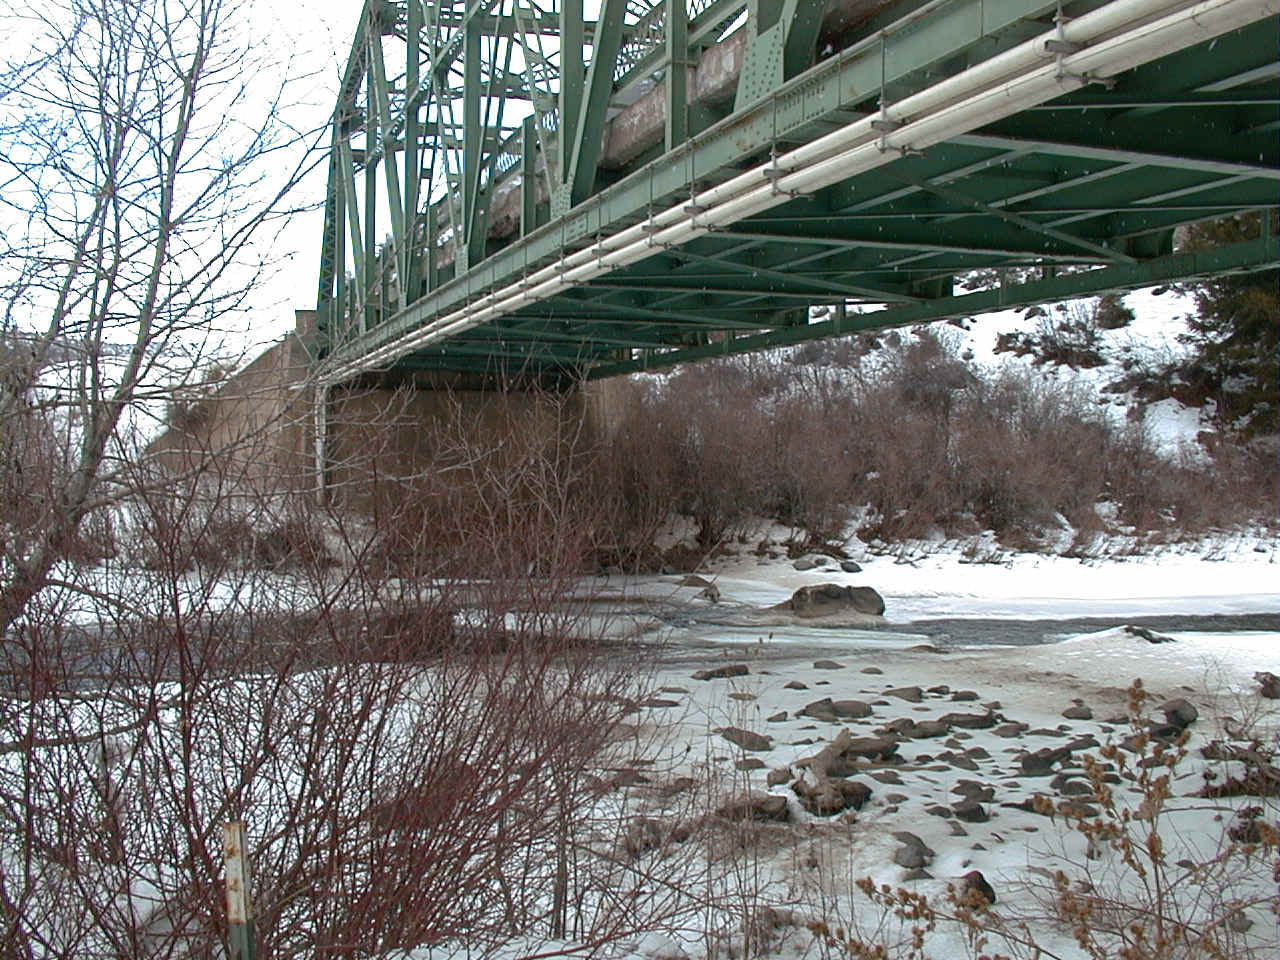 River & Bridge detail image